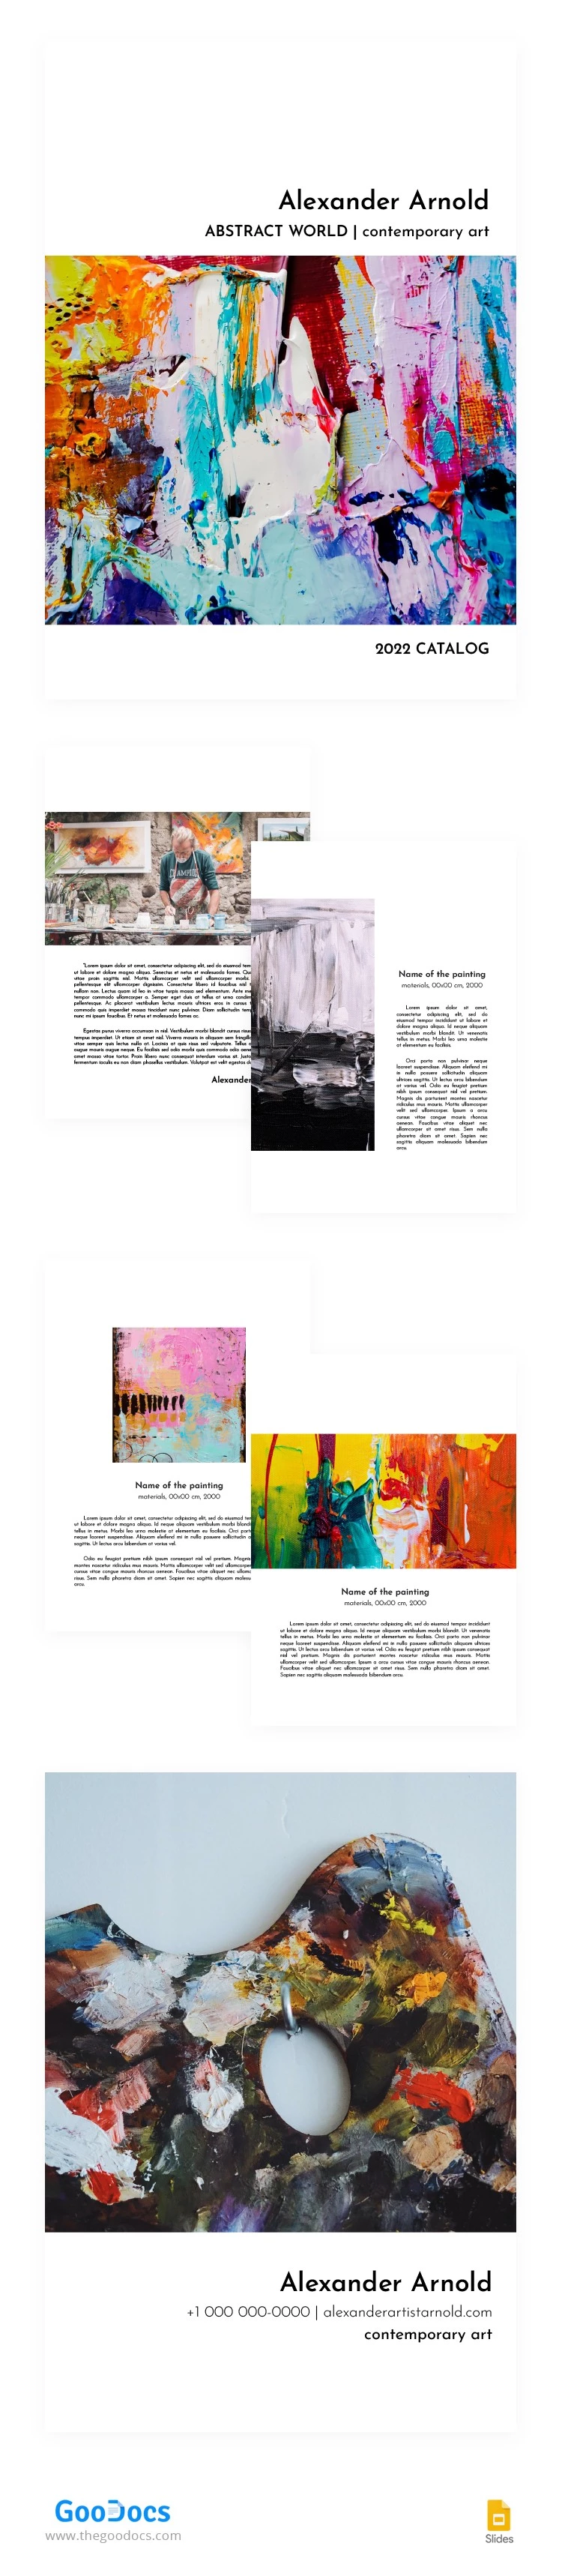 Catalogue des artistes abstraits - free Google Docs Template - 10062785